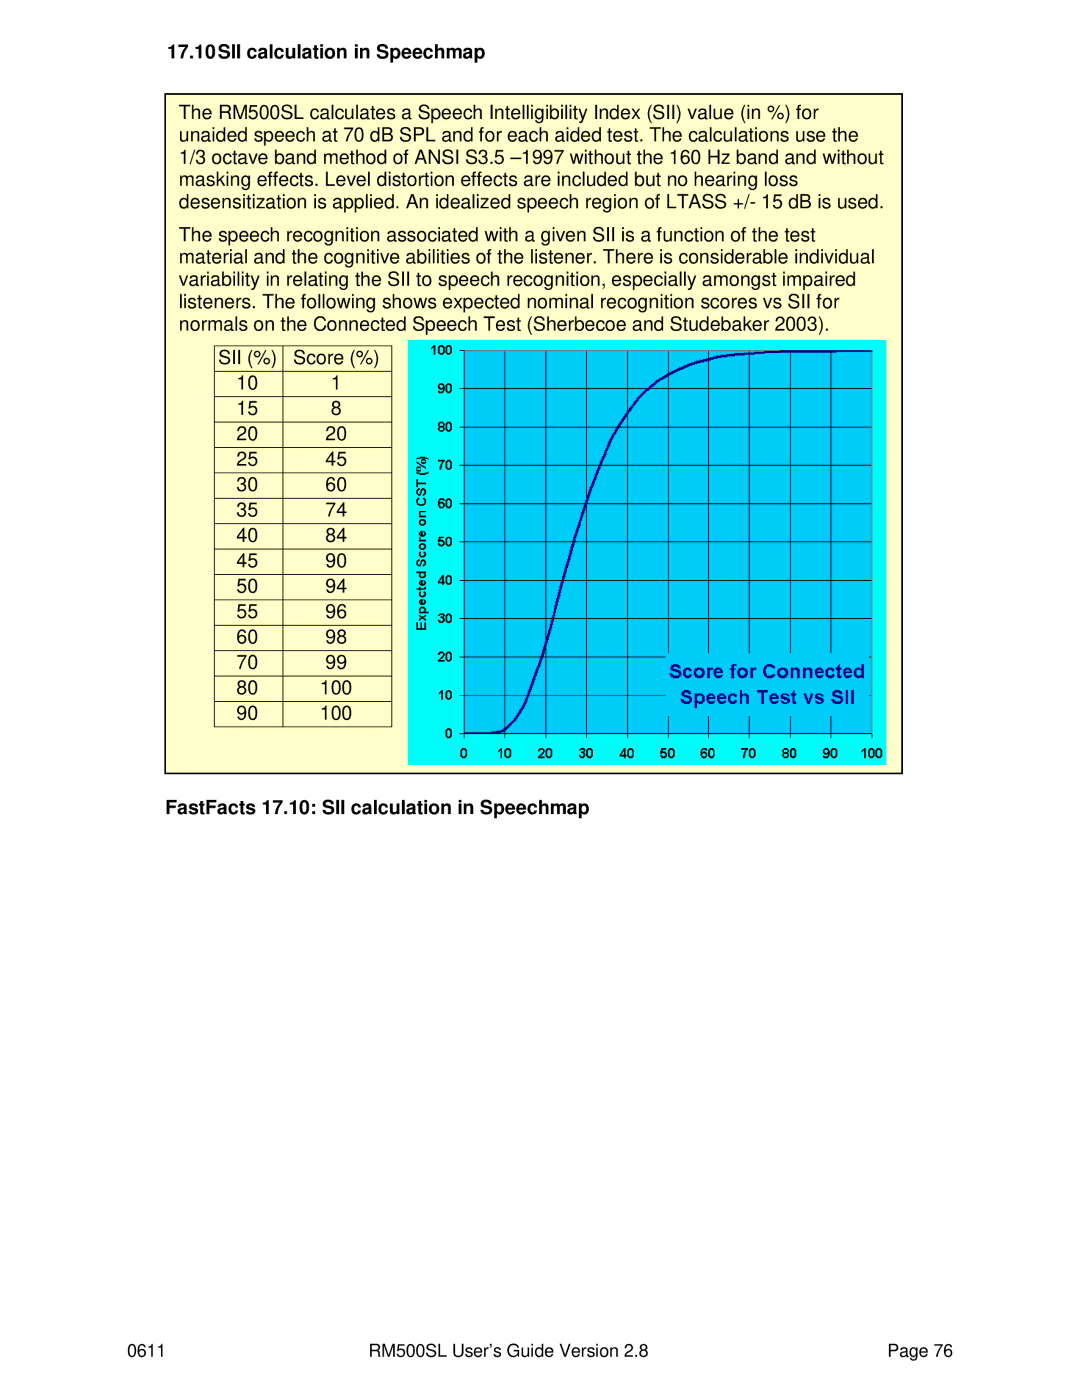 HP RM500SL manual 17.10SII calculation in Speechmap, FastFacts 17.10 SII calculation in Speechmap 